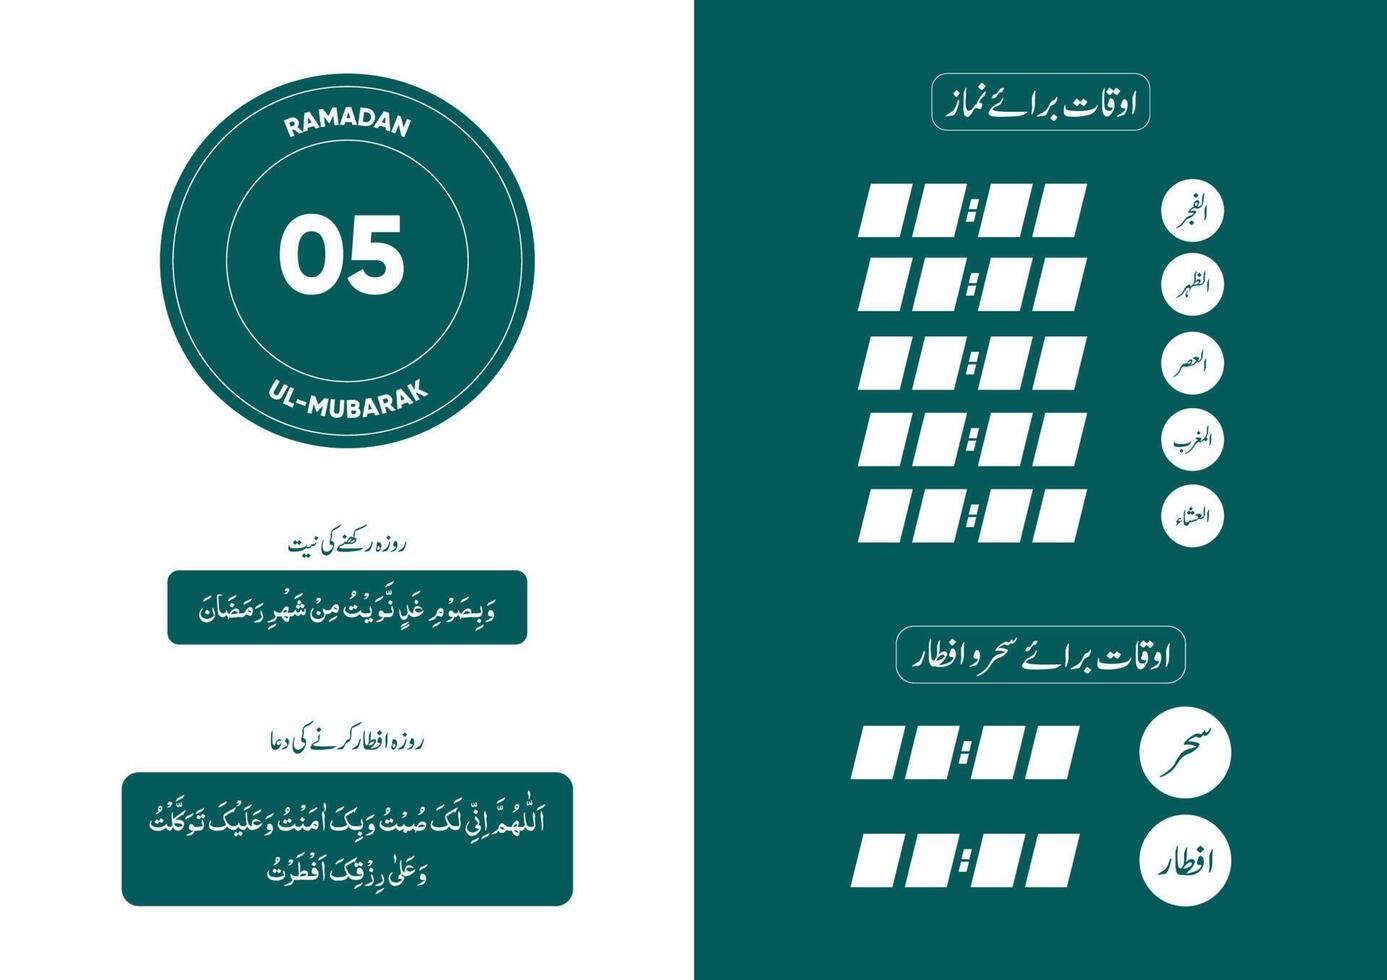 Ramadan kareem timing kalender voor namaz met sehr-o-iftar duas vector